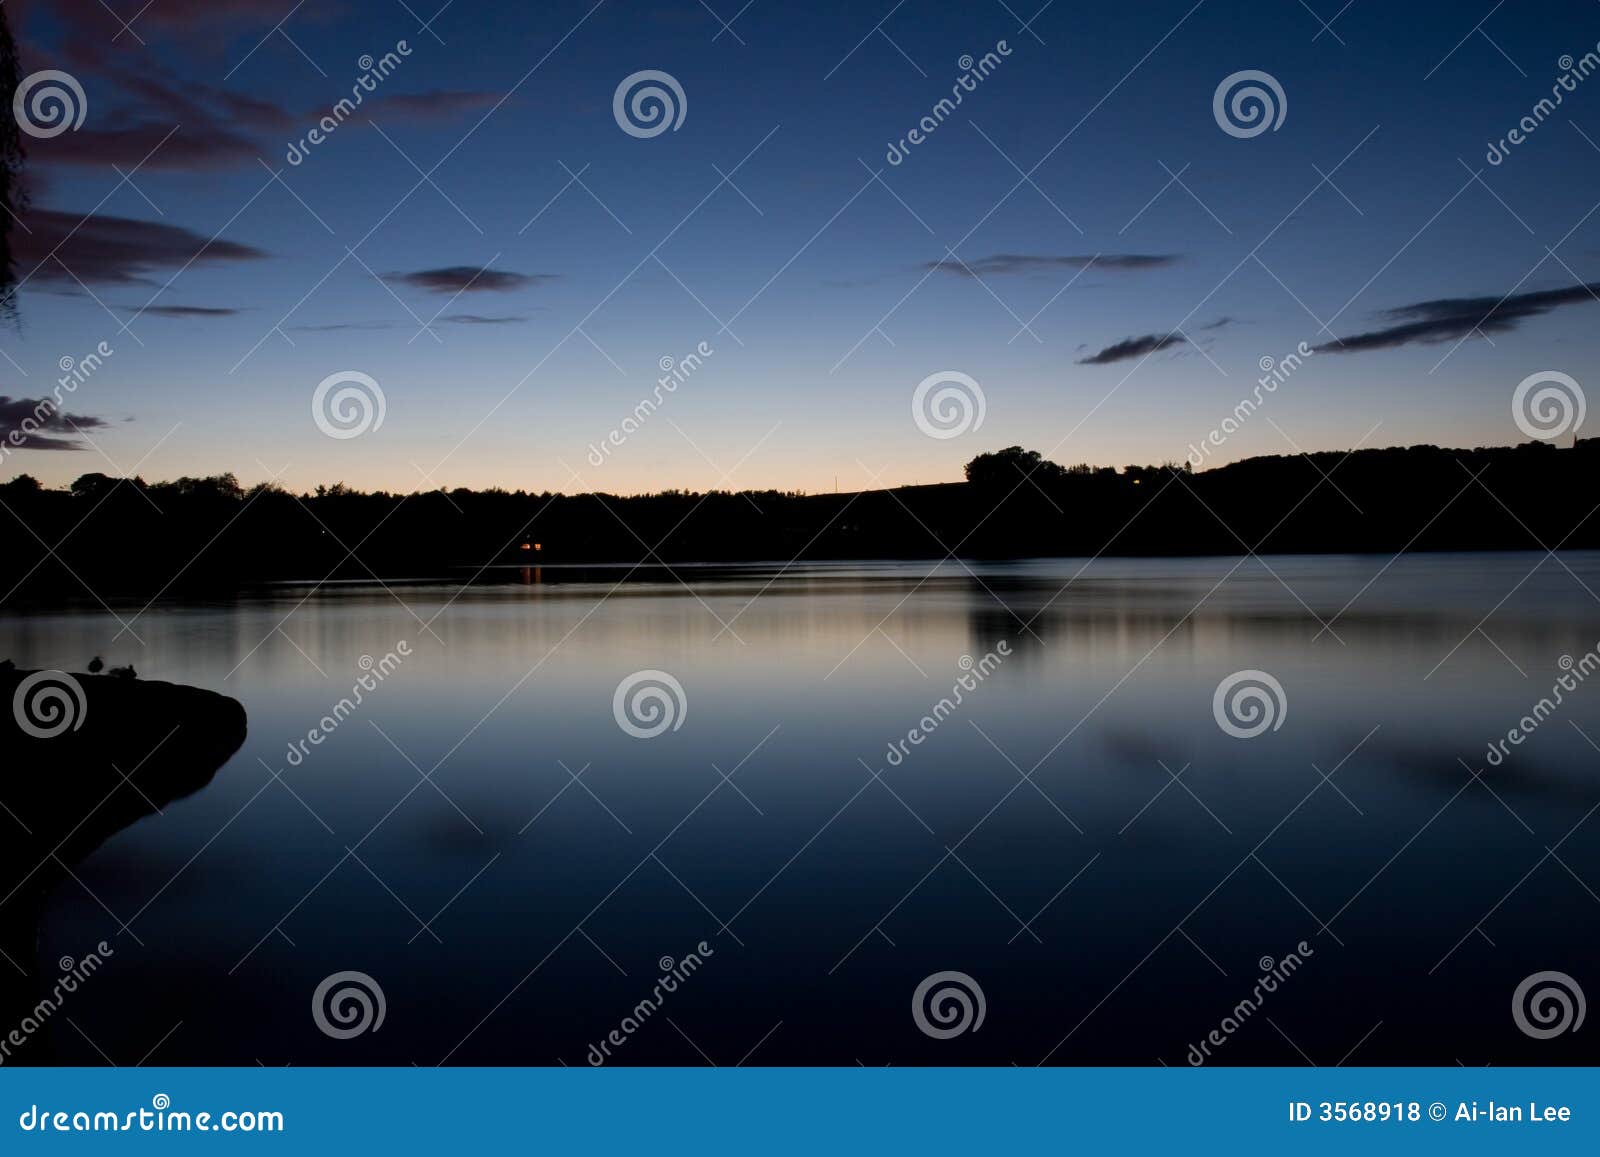 serene and reflective lake